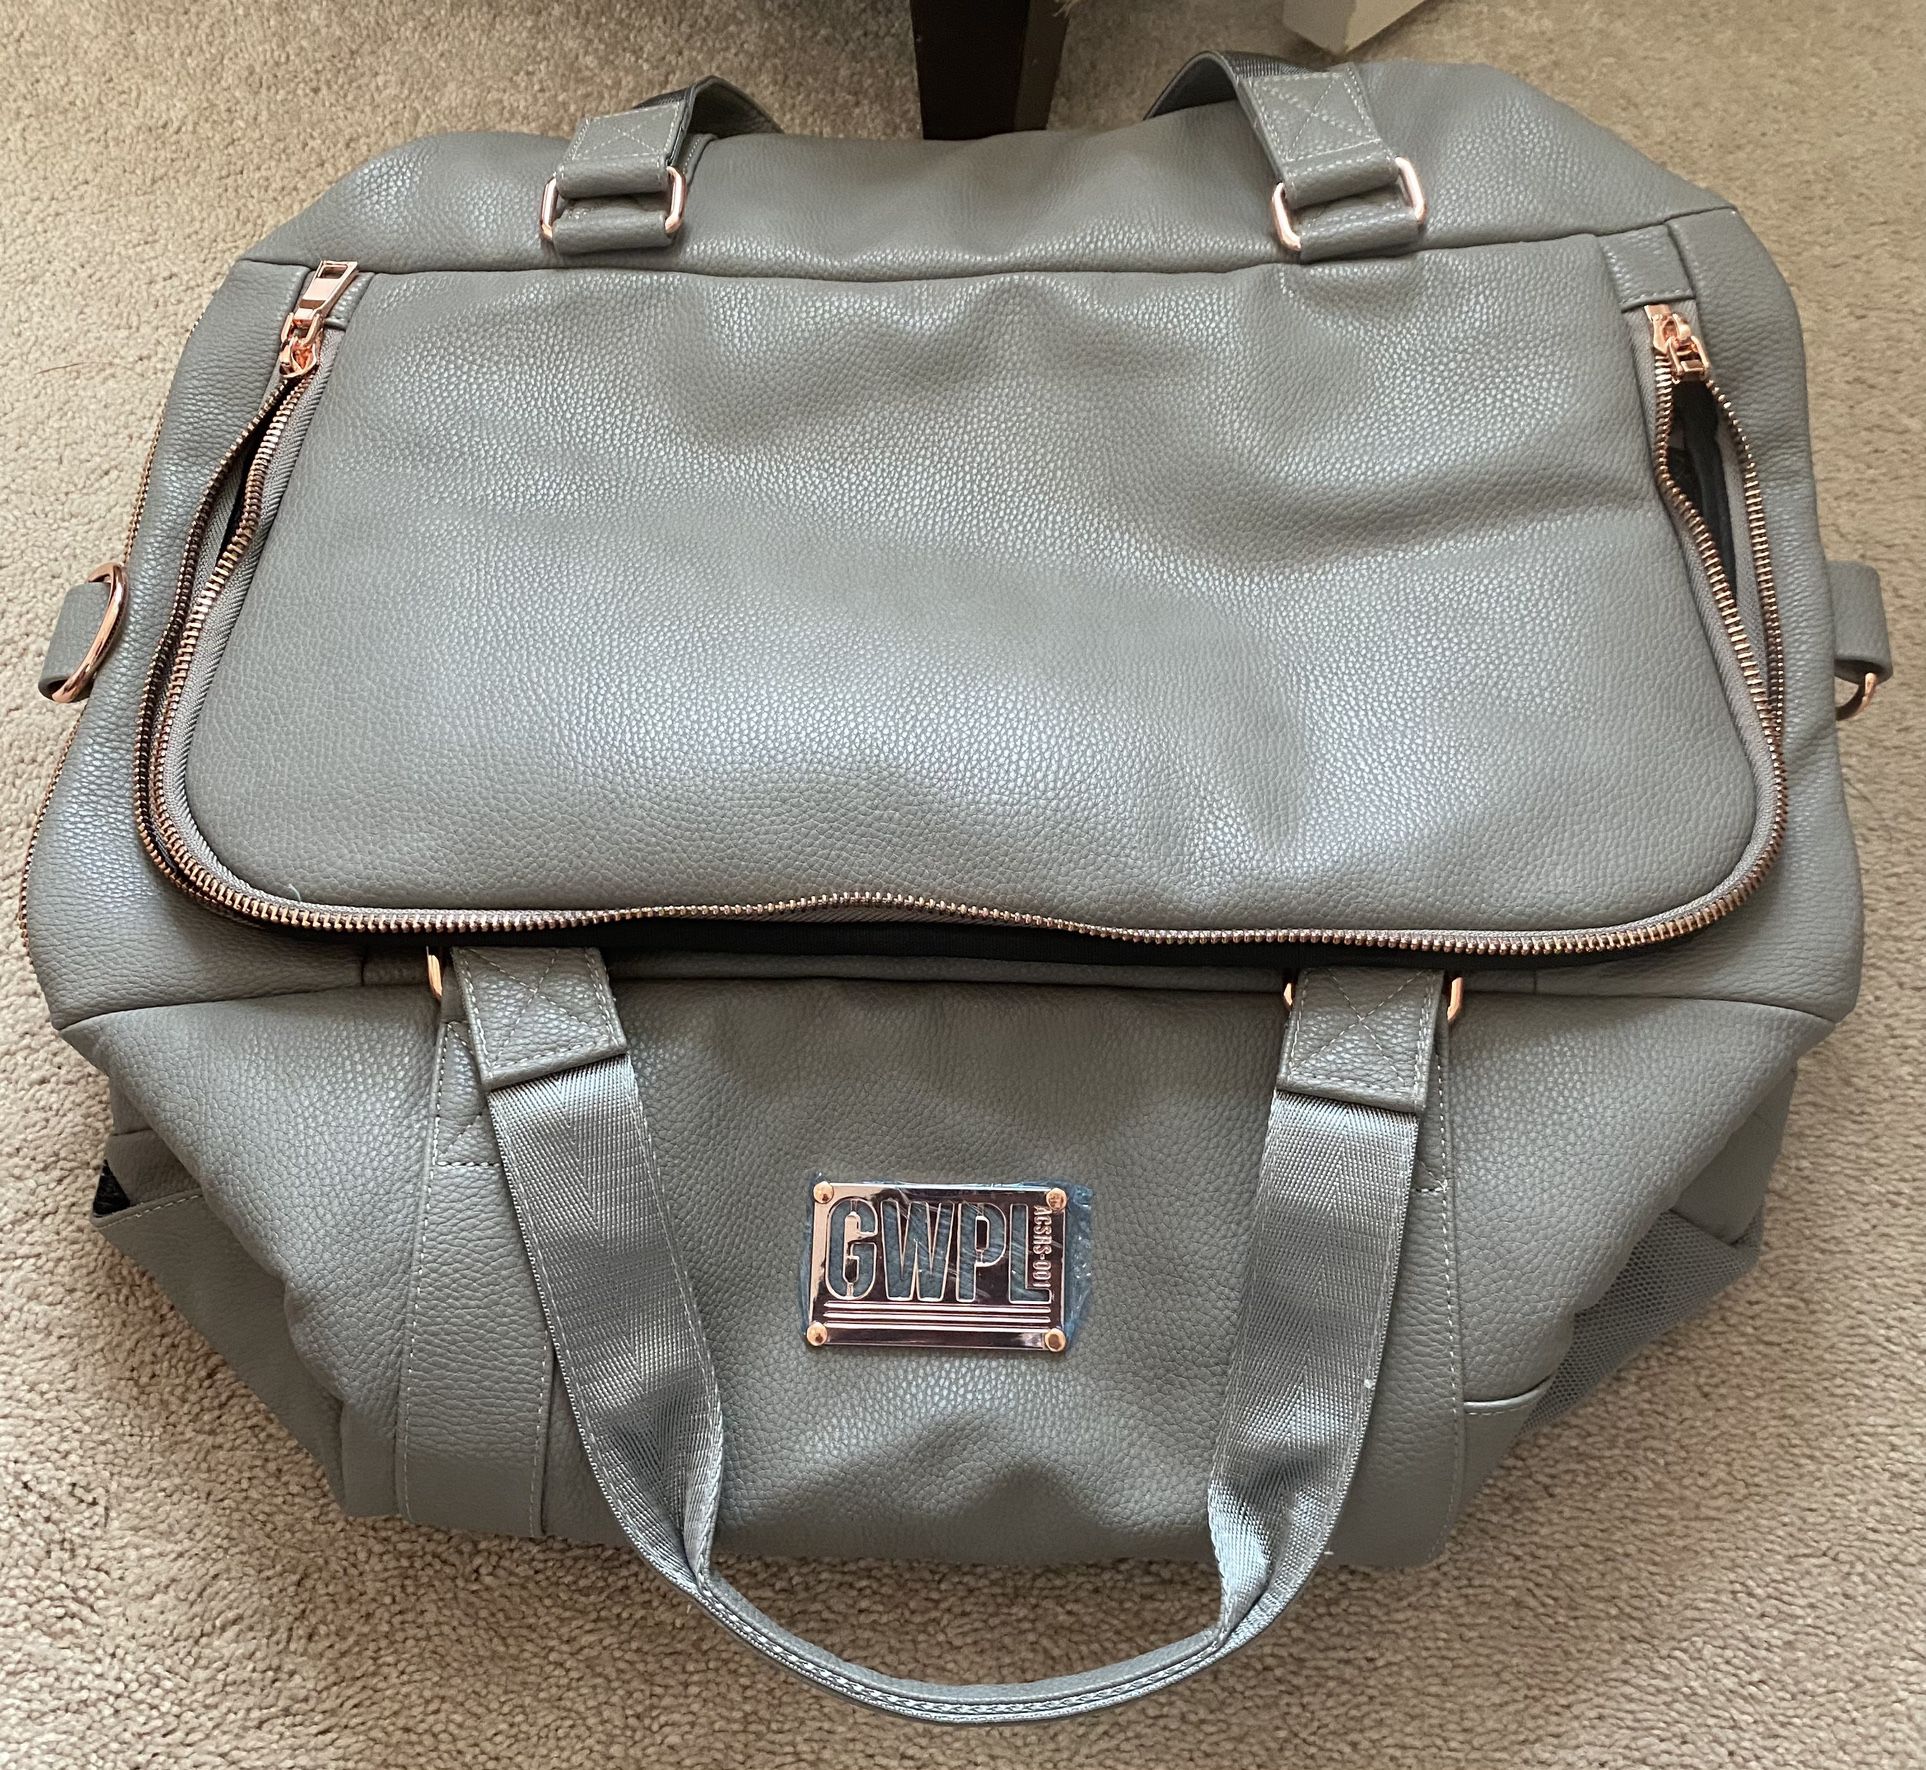 GWPL Lift Heavy Duffle Bag - Brand New, Never Used - $150